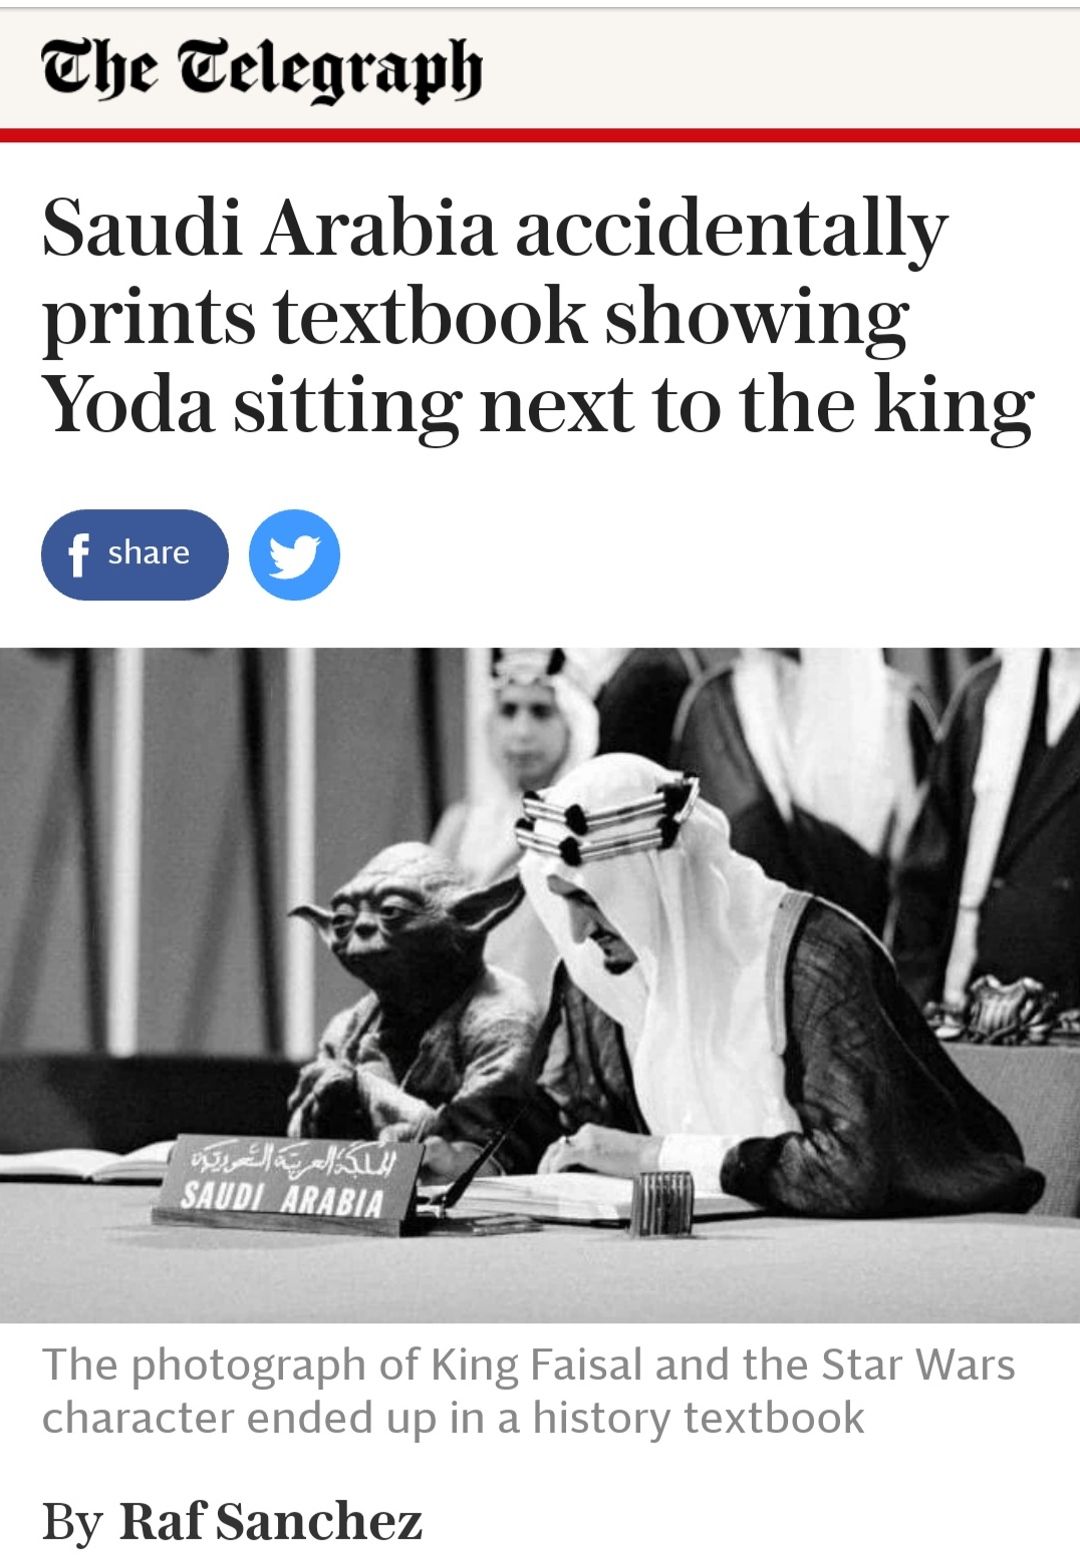 Saudi King meets with Iraqi President, 1945